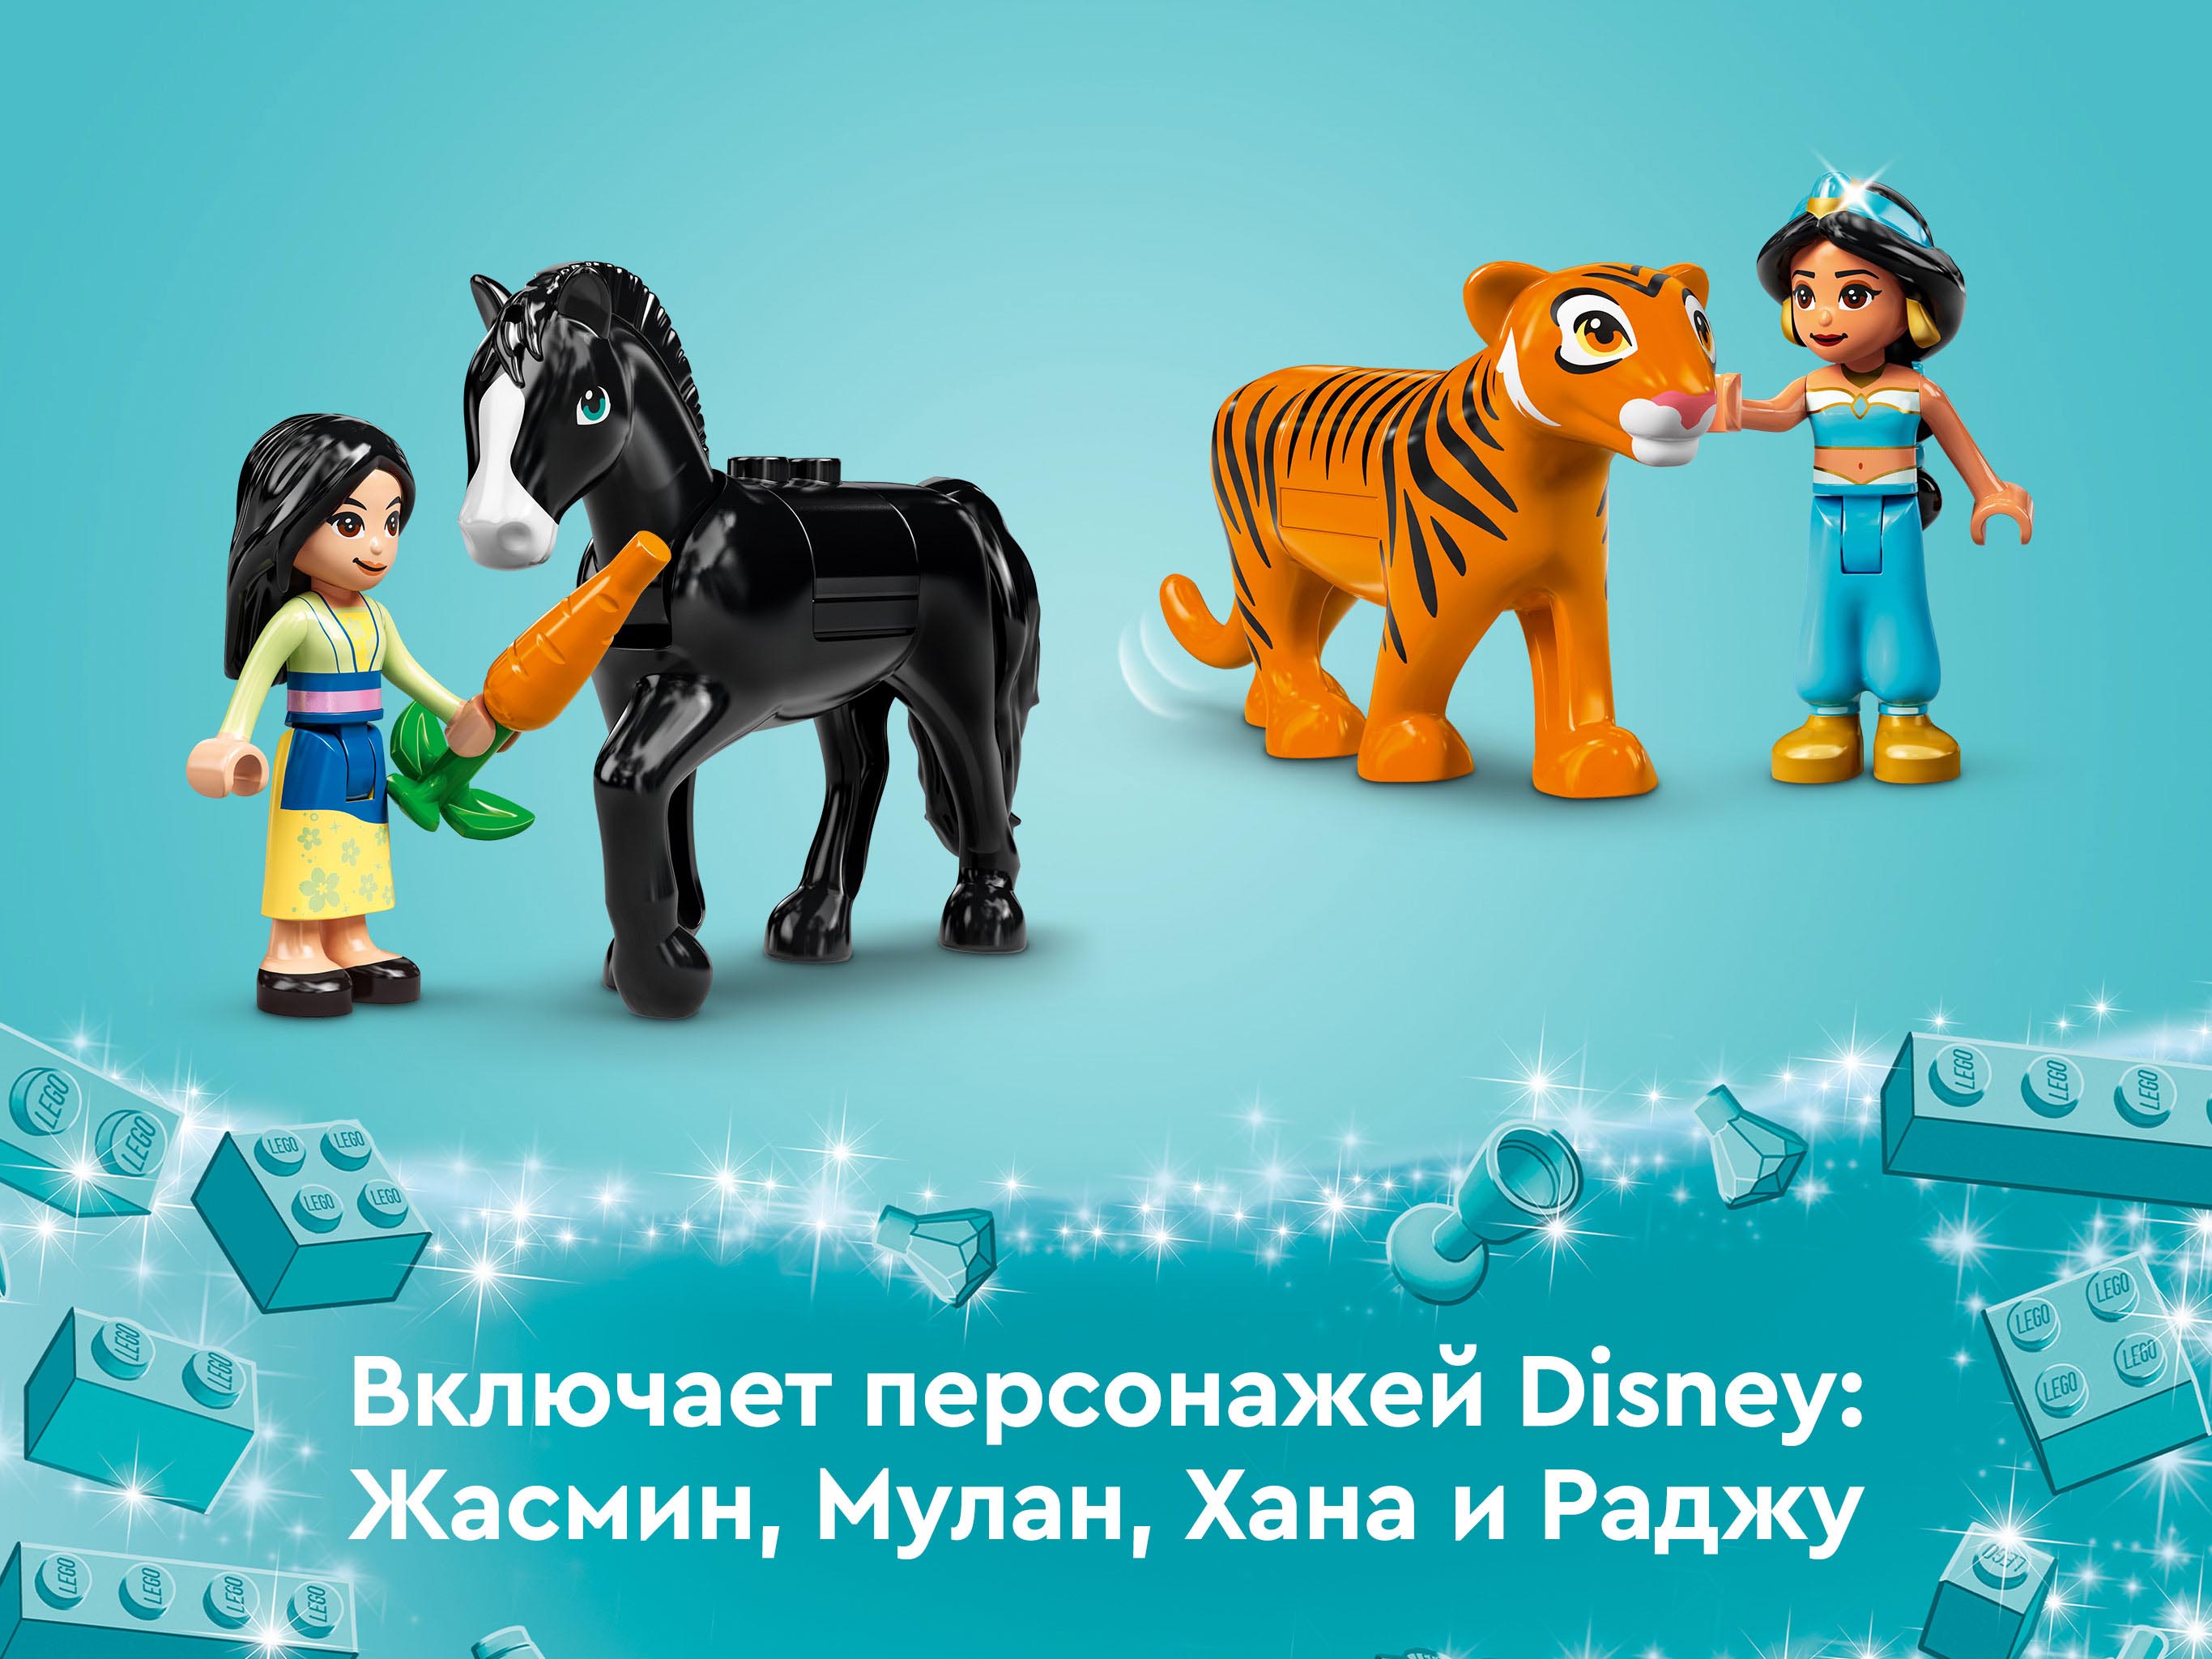 Lego Disney Princess 43208 Приключения Жасмин и Мулан